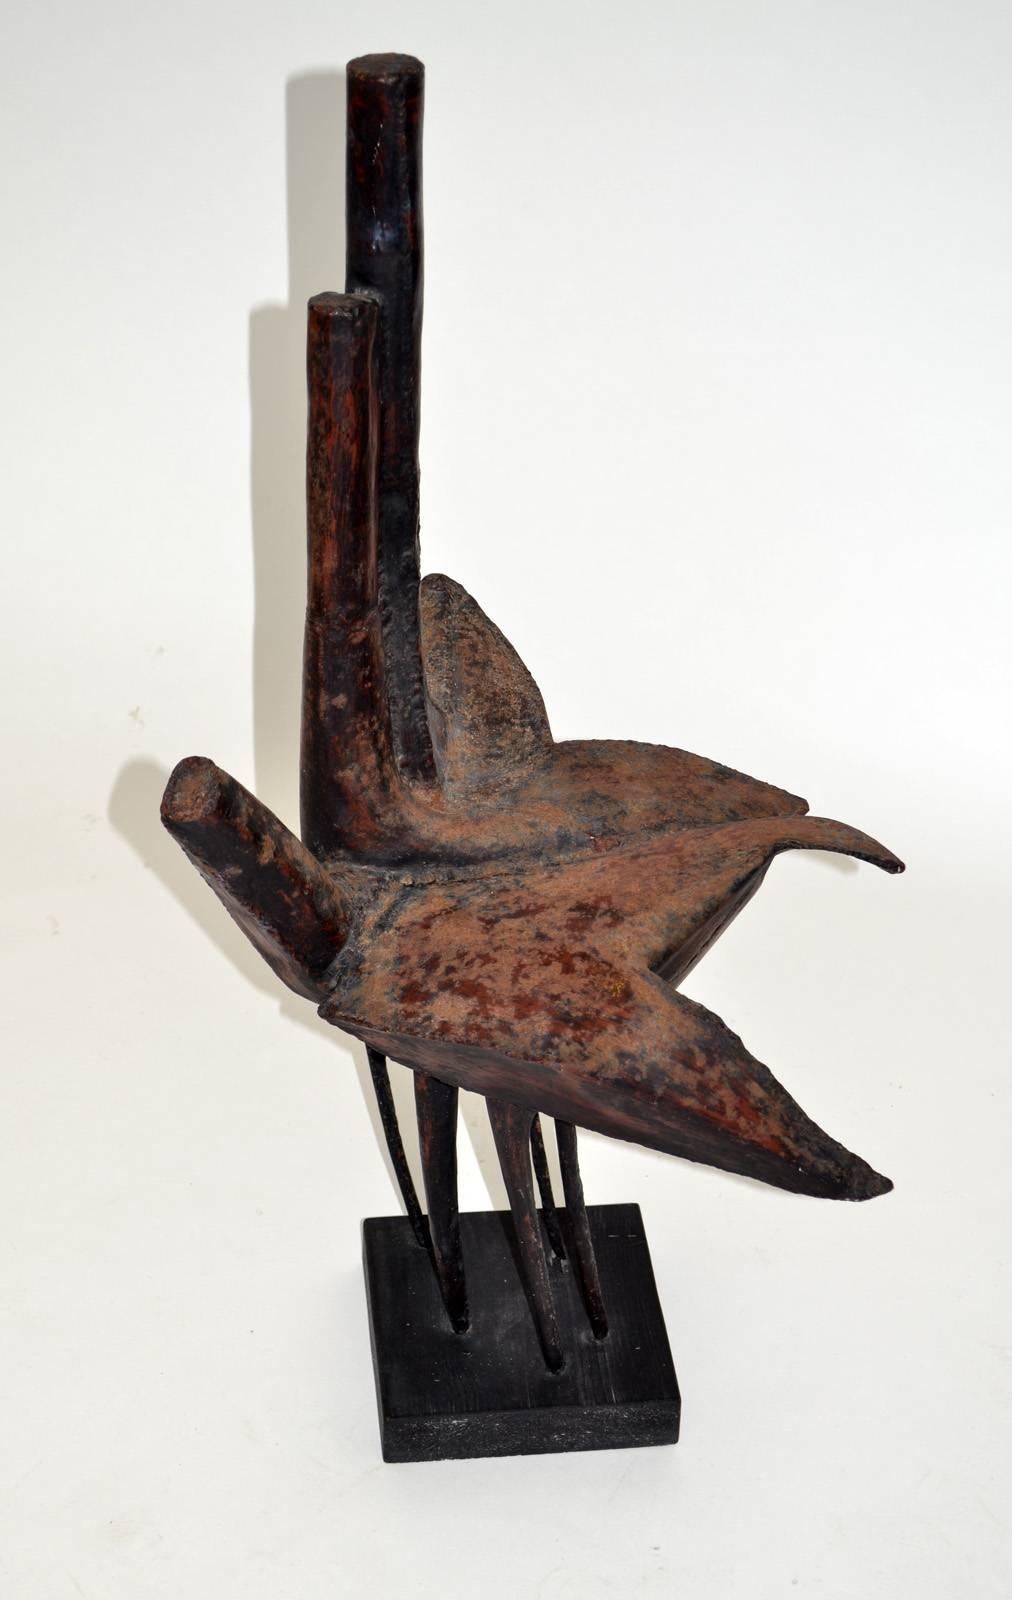 Abstract Brutalist sculpture of birds by Robert Klein, Mid-Century Modern. Original label intact. 